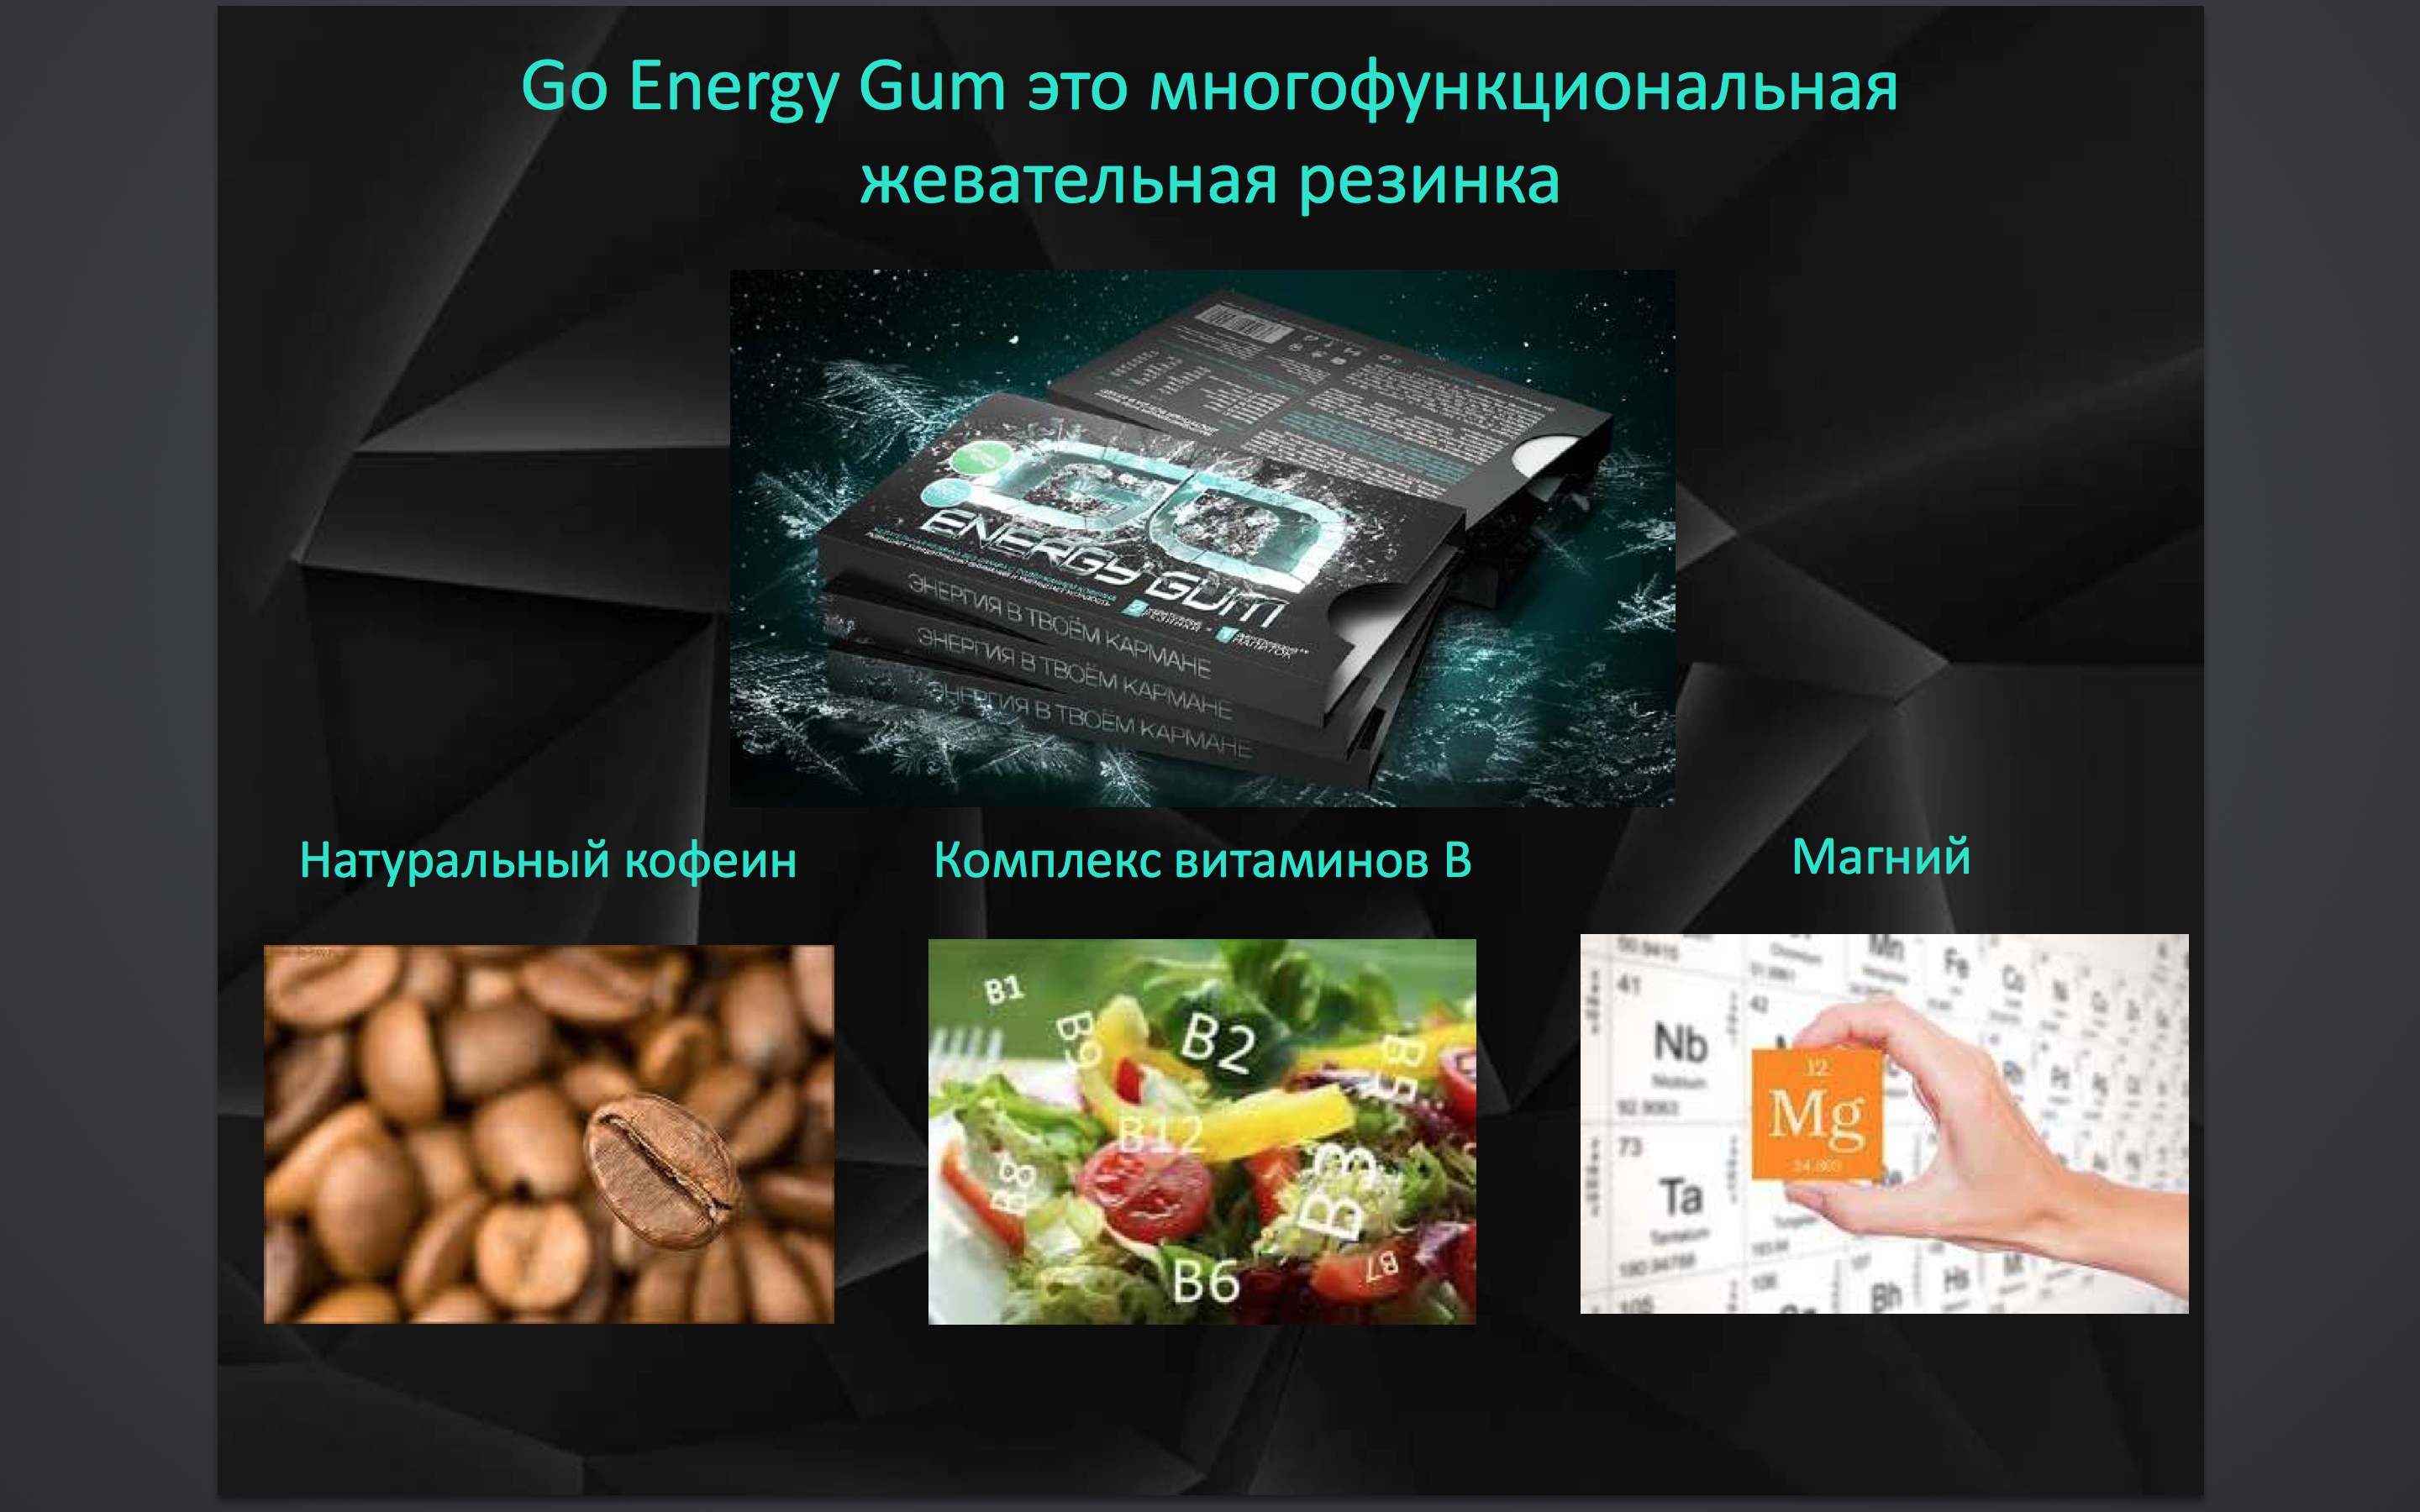 Go Energy Gum/Жвачка-энергетик!